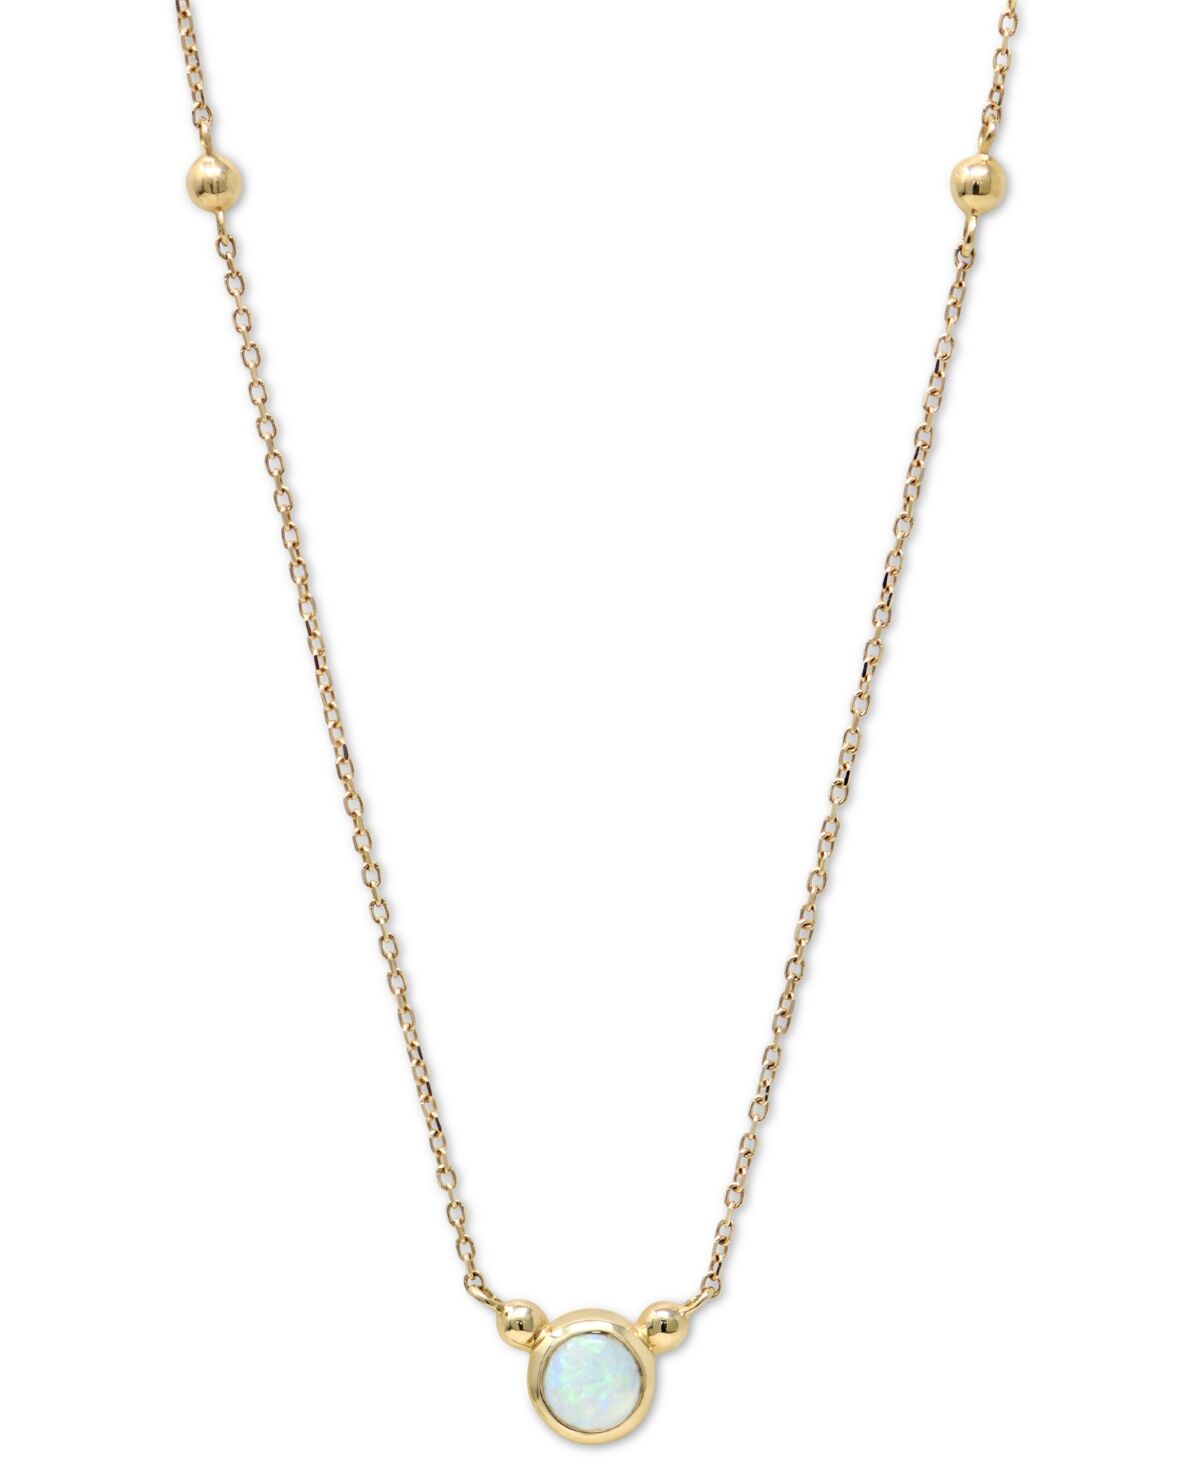 Anzie Australian Opal Bezel Solitaire Pendant Necklace in 14k Gold, 14